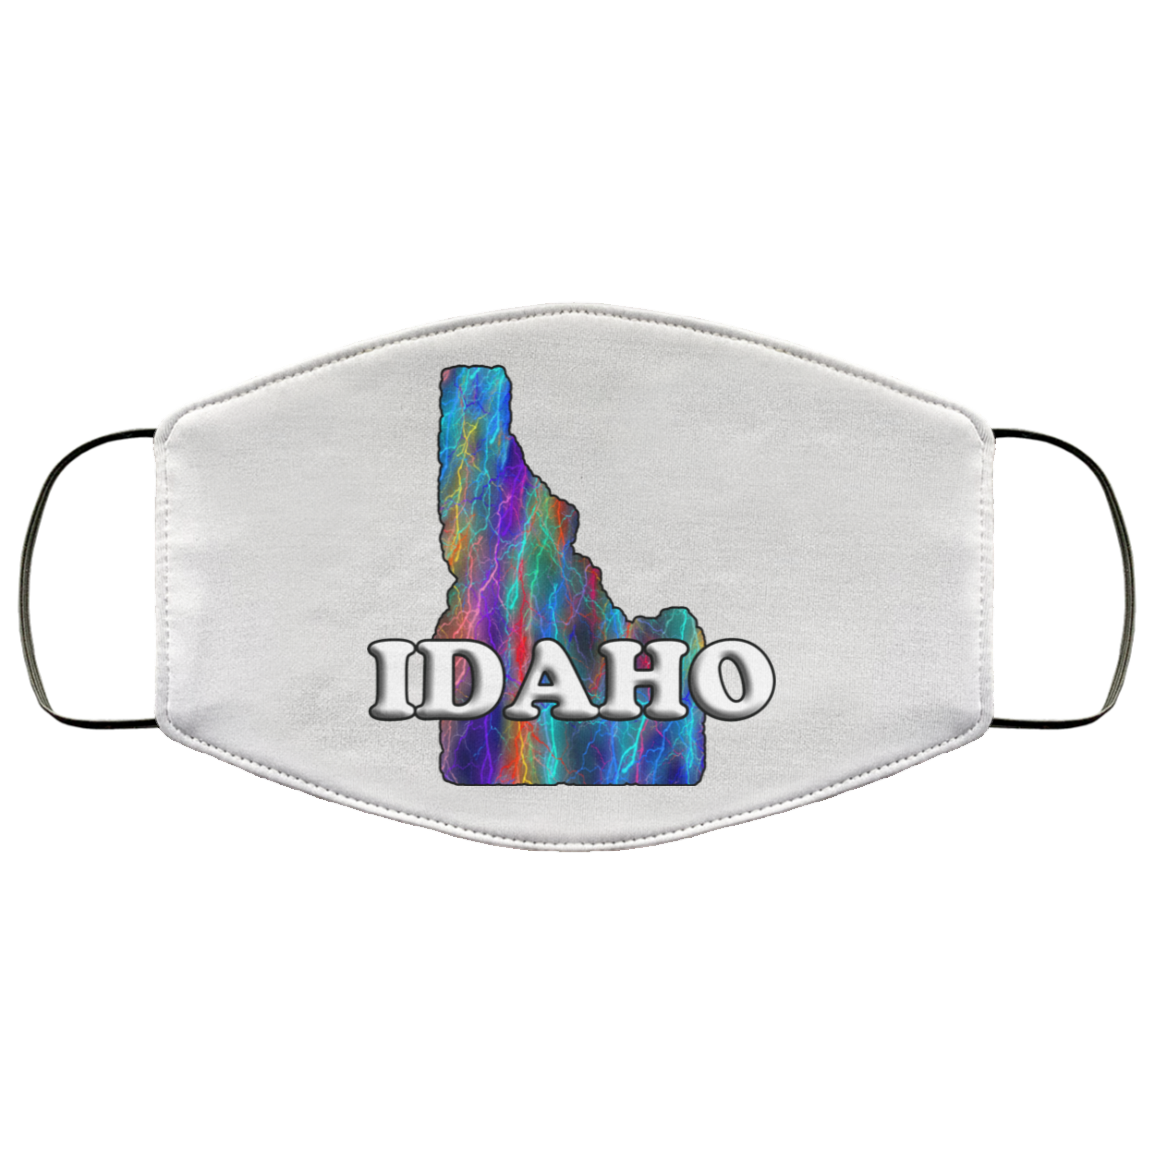 Idaho 2 Layer Protective Face Mask